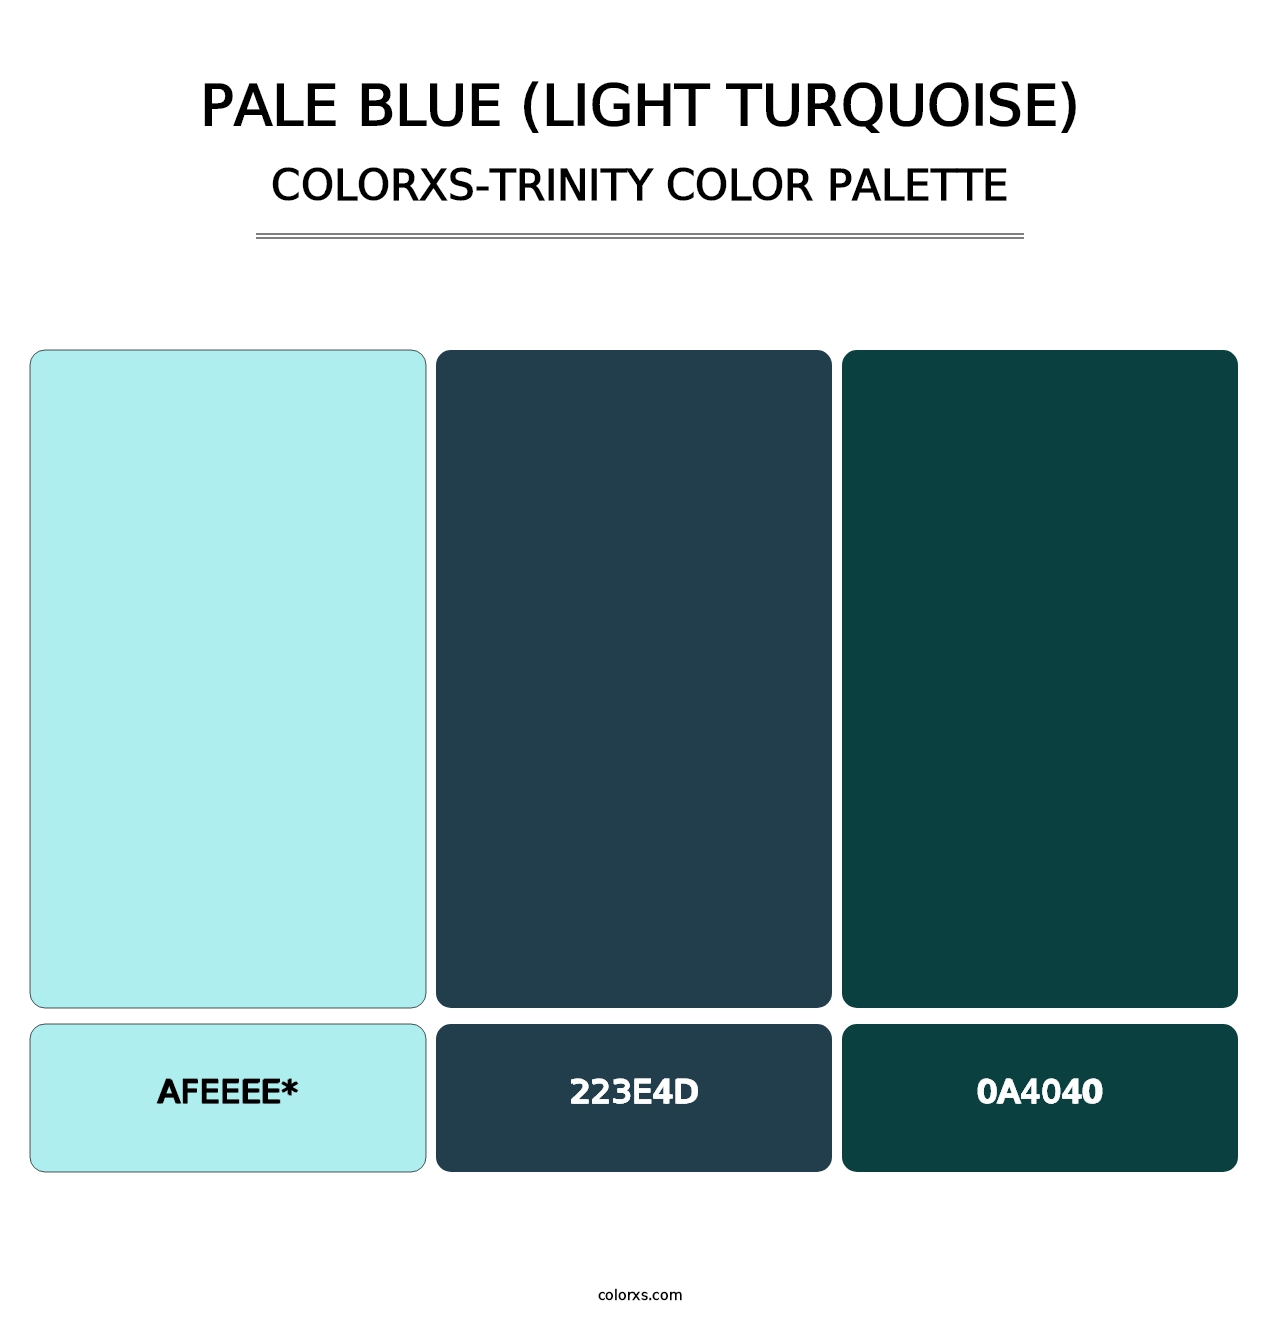 Pale Blue (Light Turquoise) - Colorxs Trinity Palette